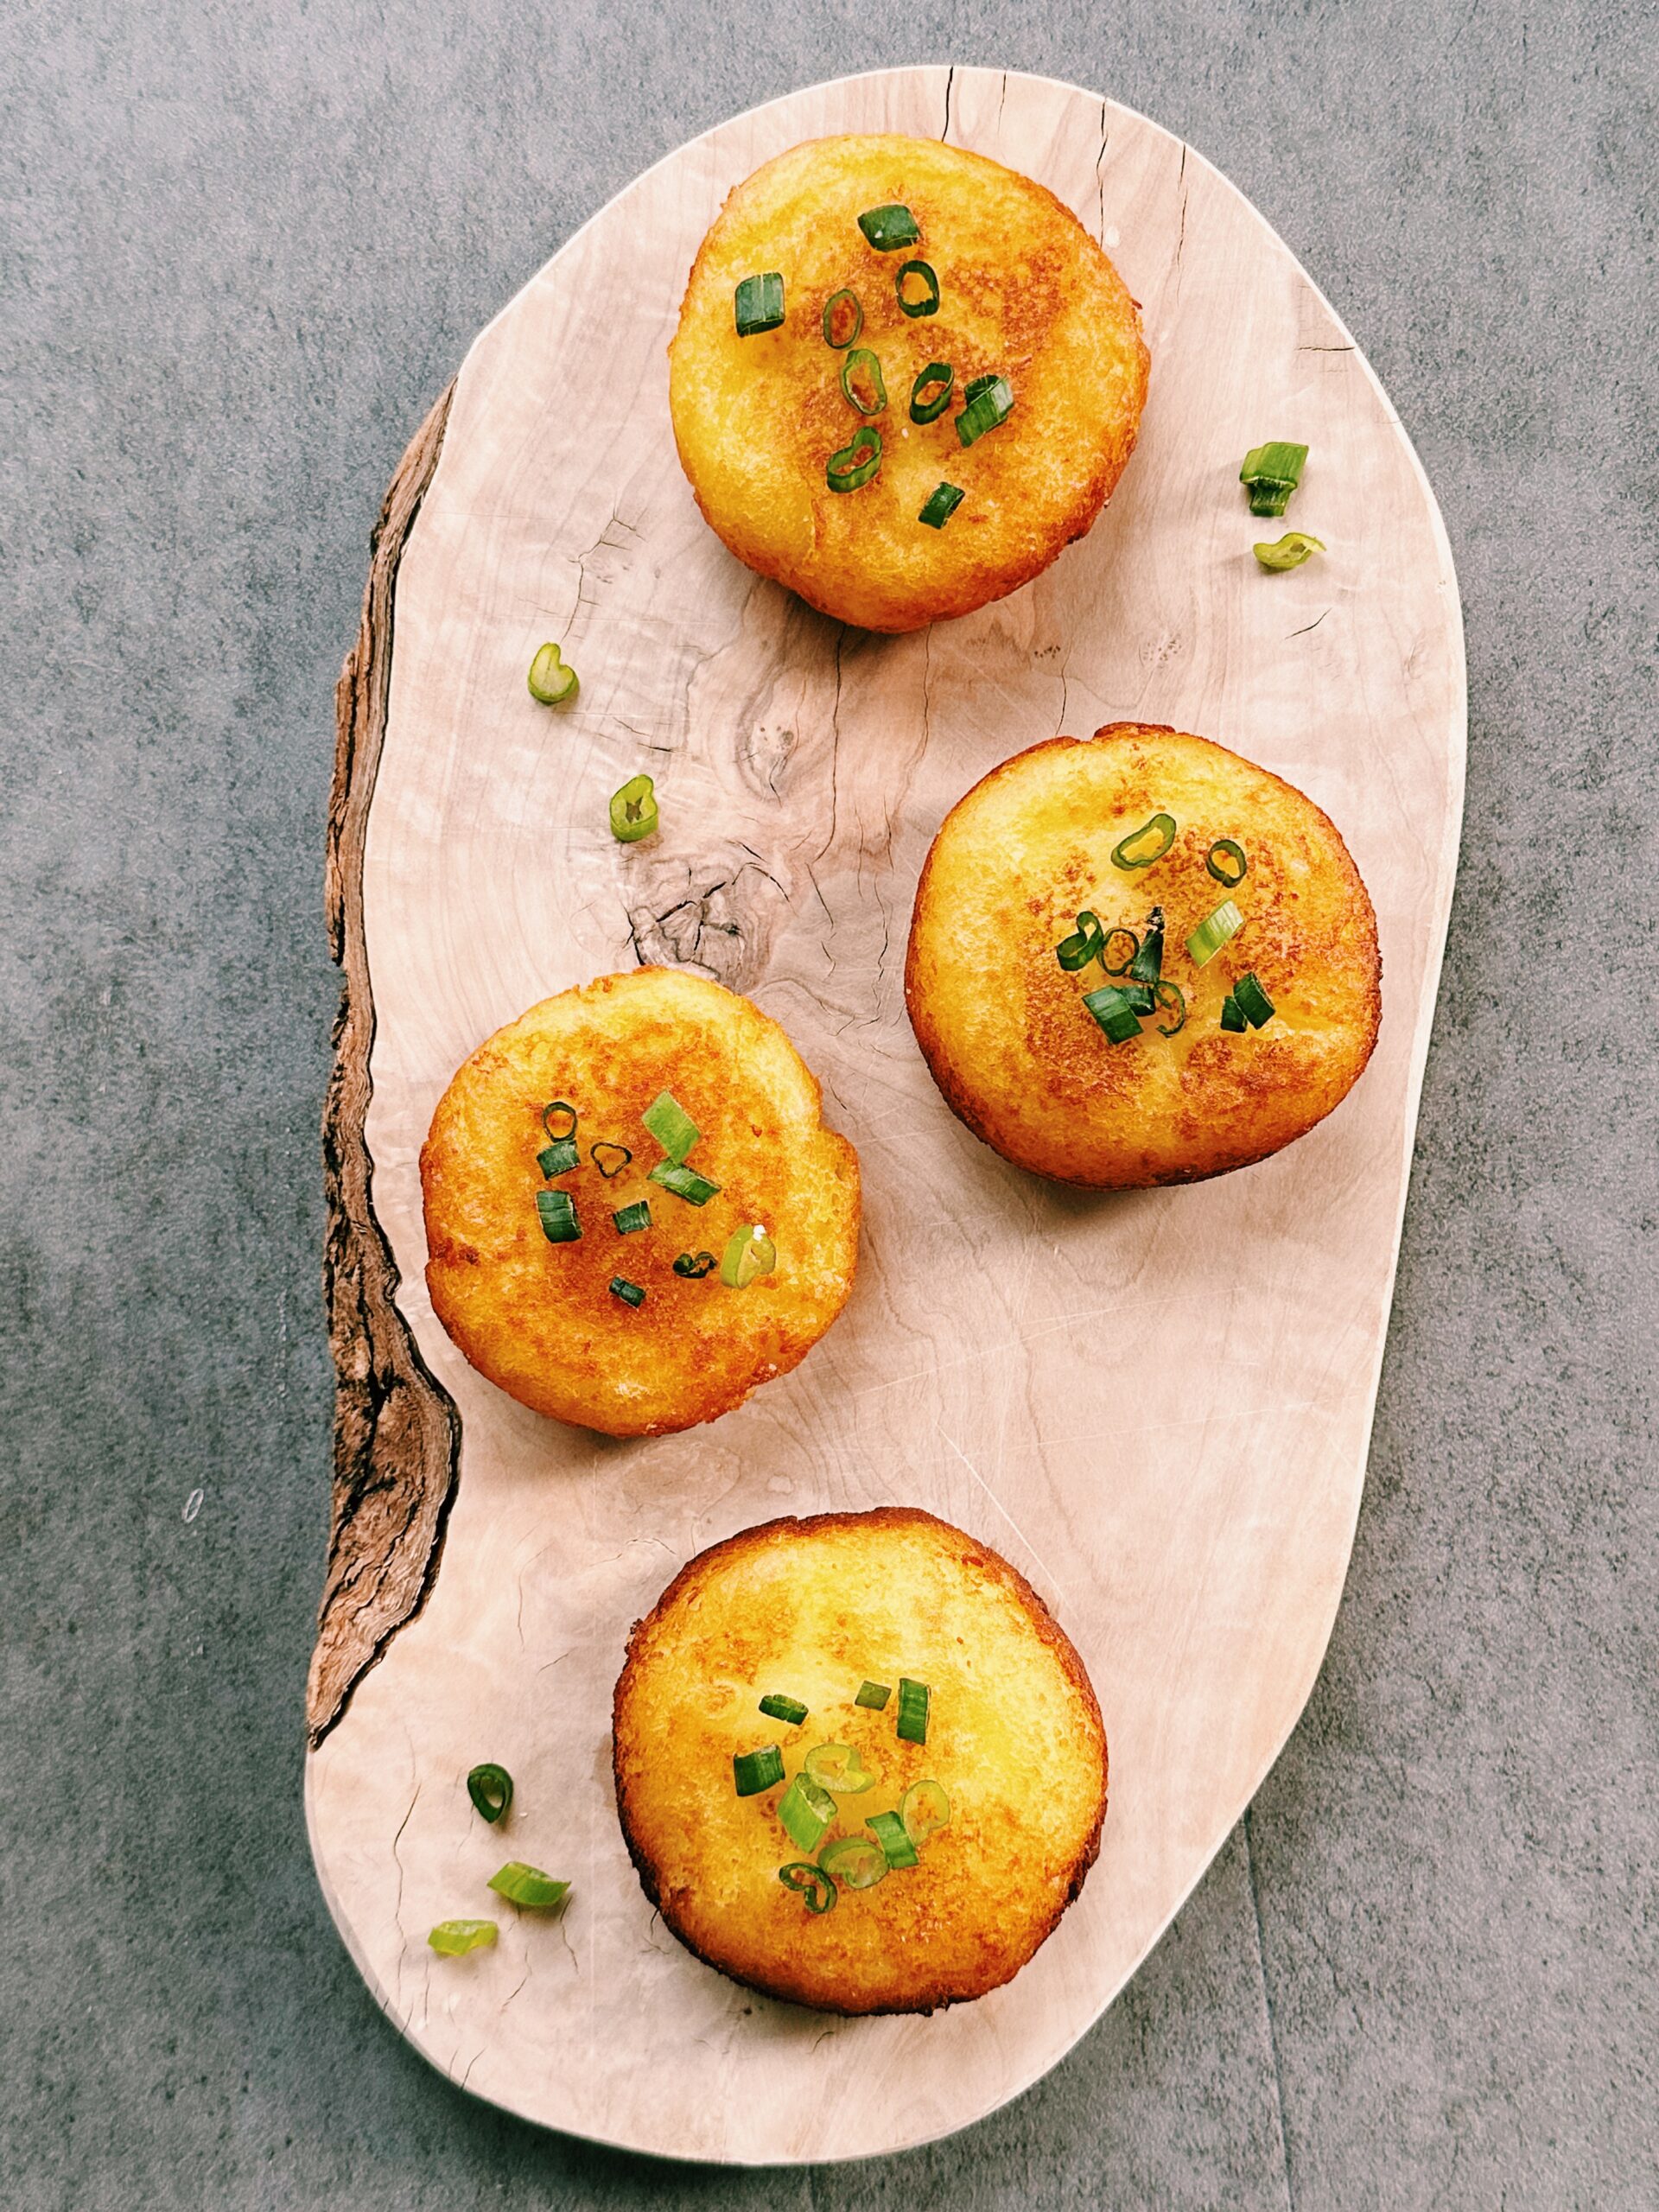 3 Ingredient Cheese Stuffed Potatoes – A Delightful Comfort Food Dish